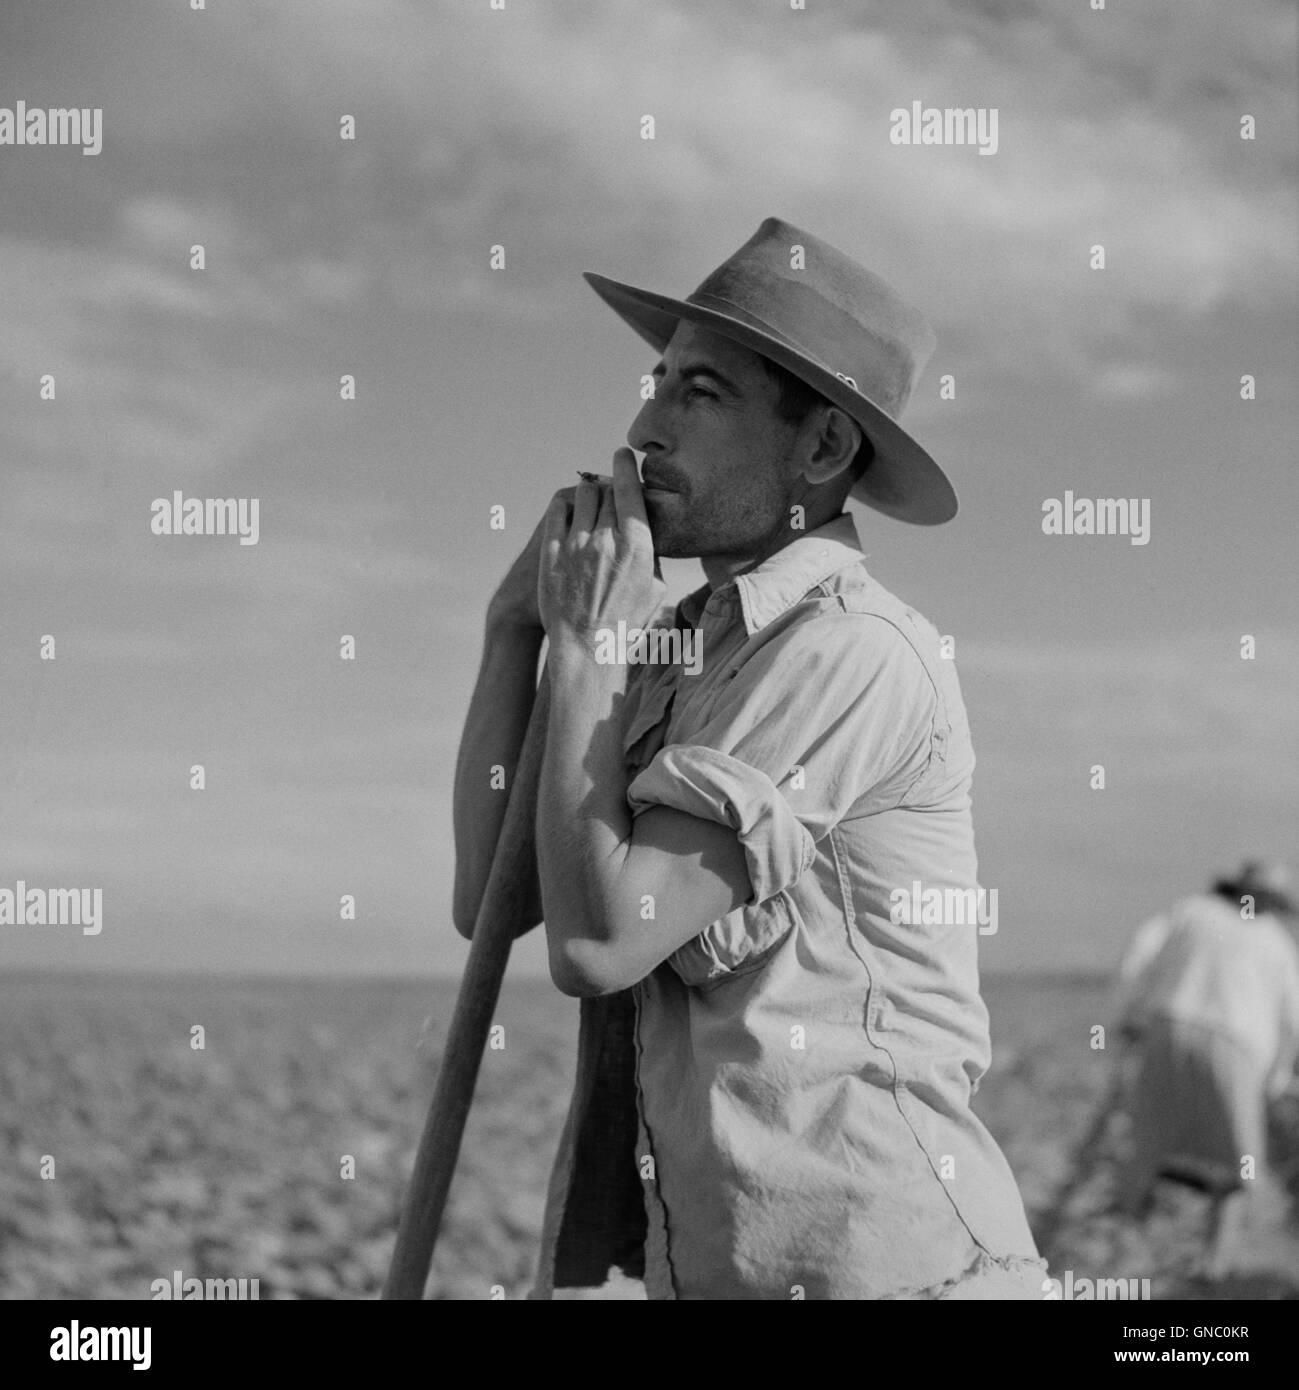 Farmer taking a Cigarette Break from Hoeing Cotton, Allen Plantation cooperative Association, vicino a Natchitoches, Louisiana, USA, Marion Post Wolcott, STATI UNITI Farm Security Administration, giugno 1940 Foto Stock